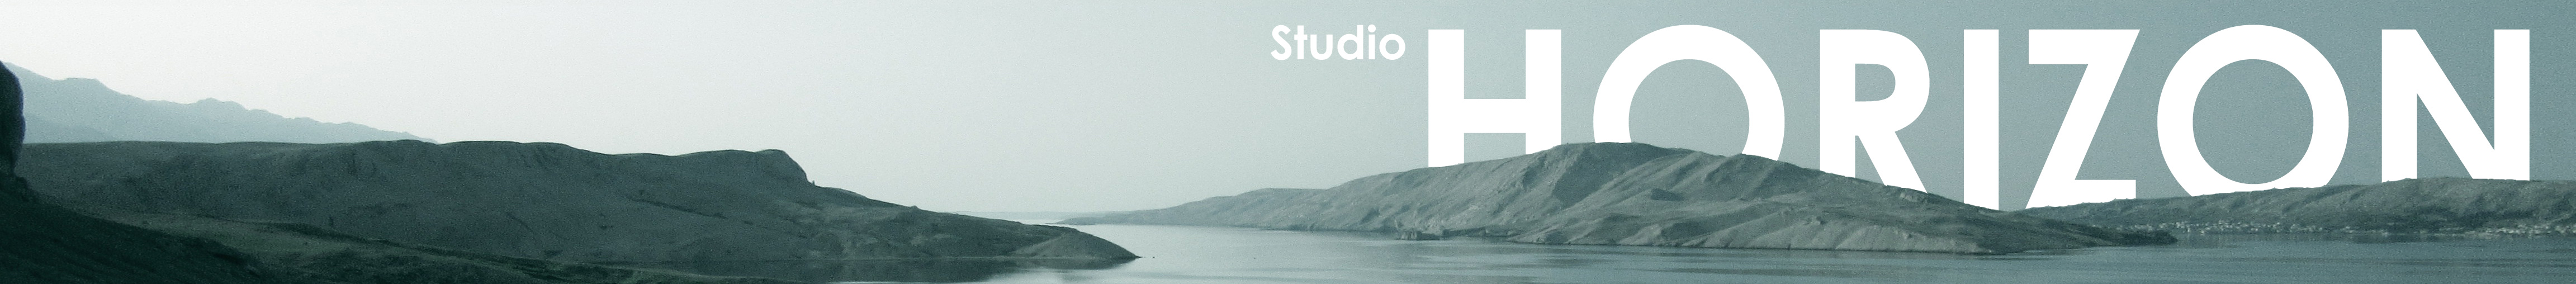 Horizon Render Vizualization Studio's profile banner